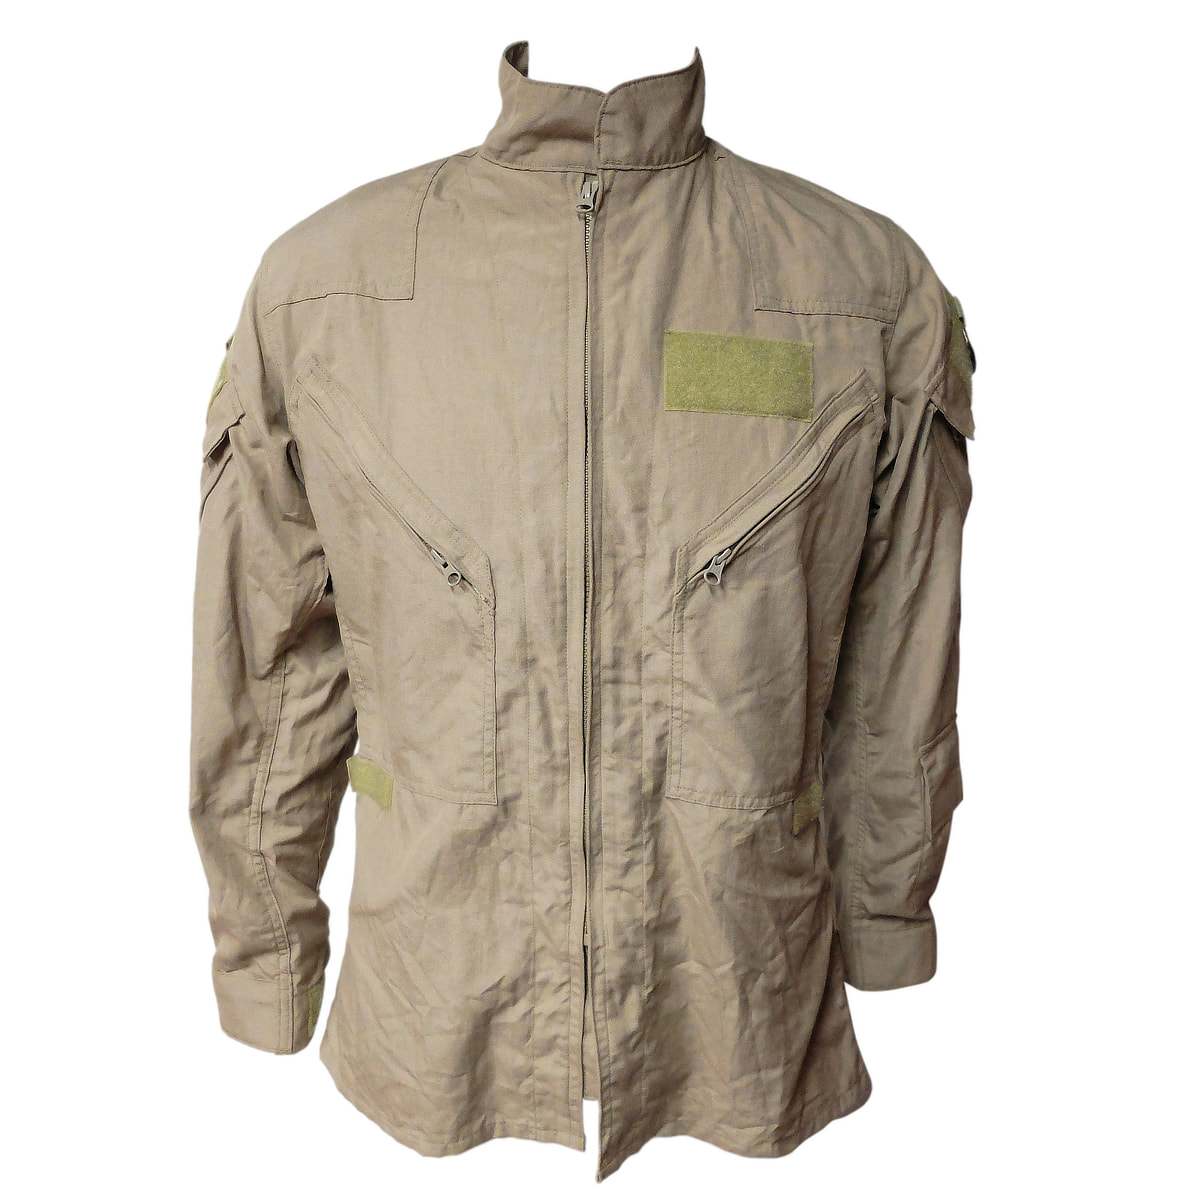 Jackets/Shirts : Drifire Aircrew Combat Shirt